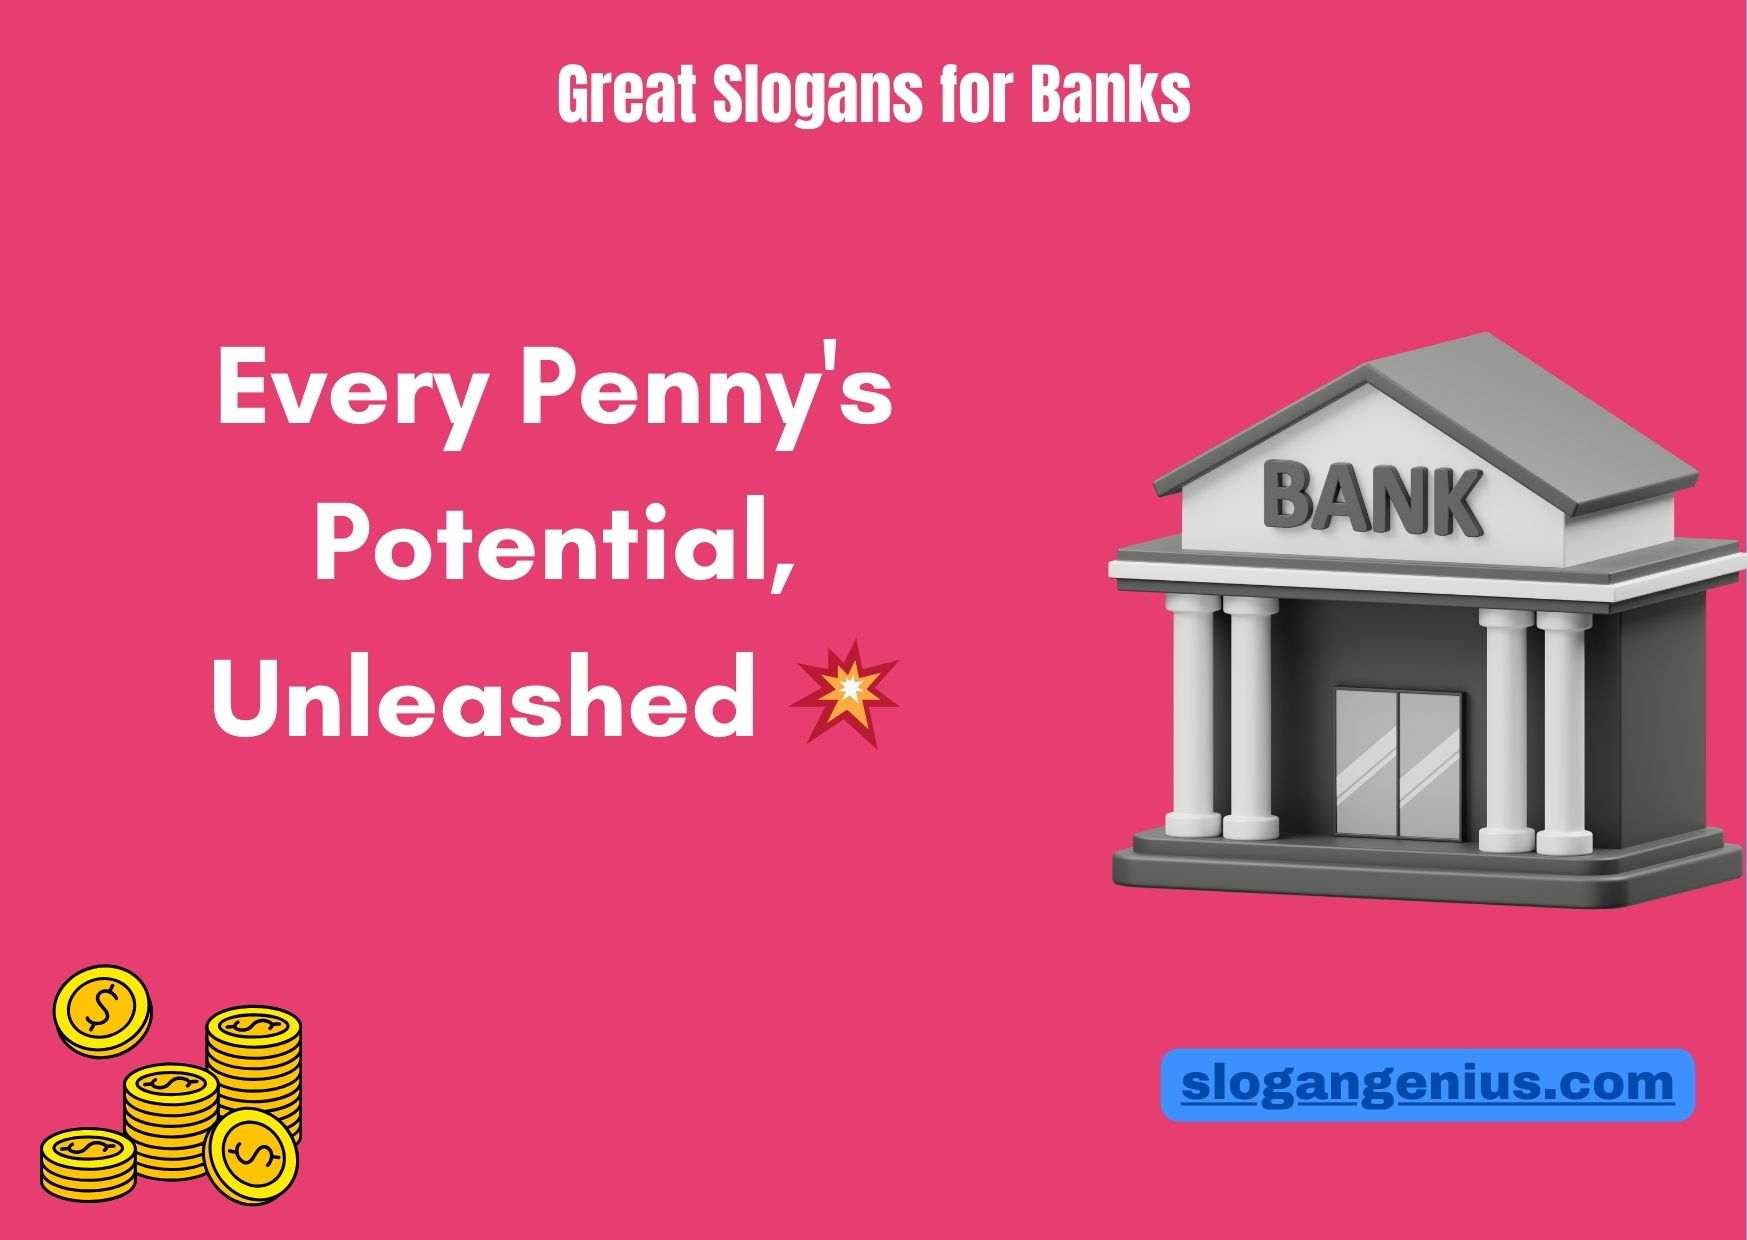 Great Slogans for Banks